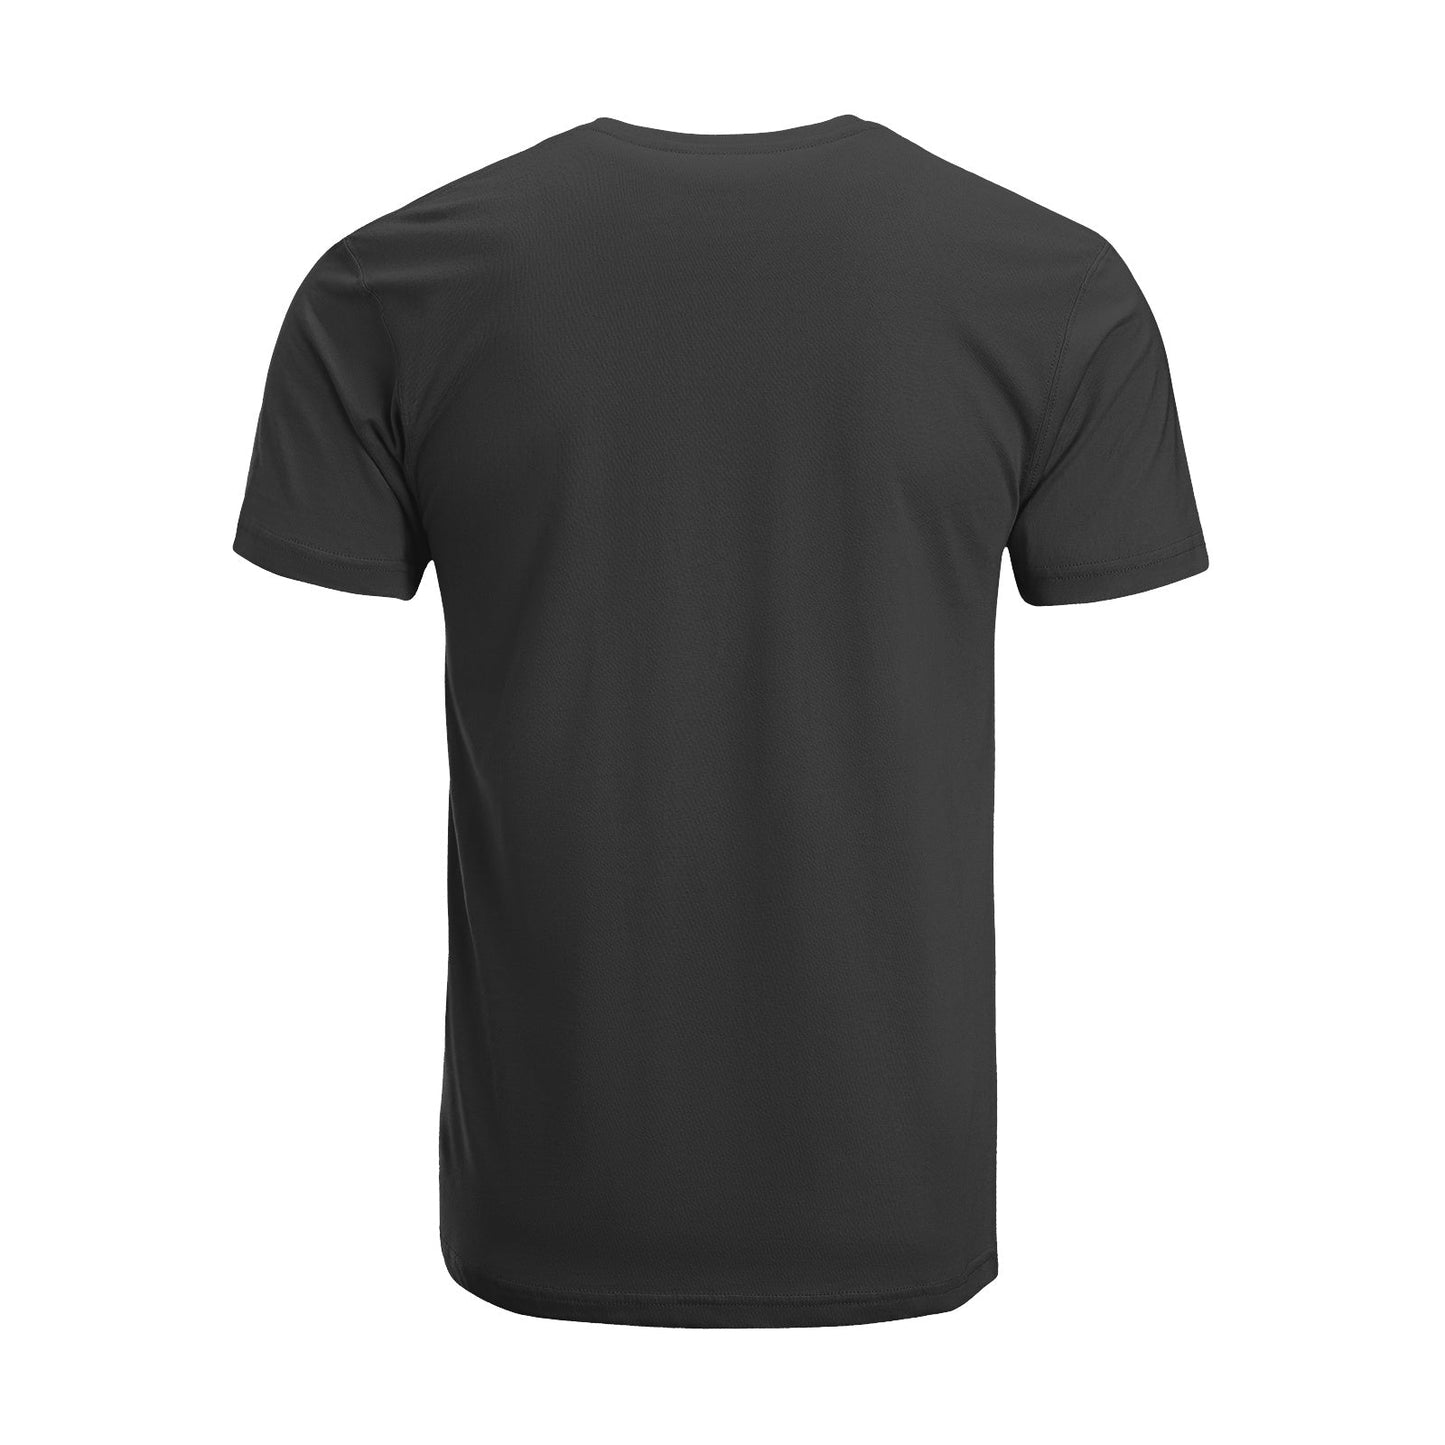 Unisex Short Sleeve Crew Neck Cotton Jersey T-Shirt MOM 05